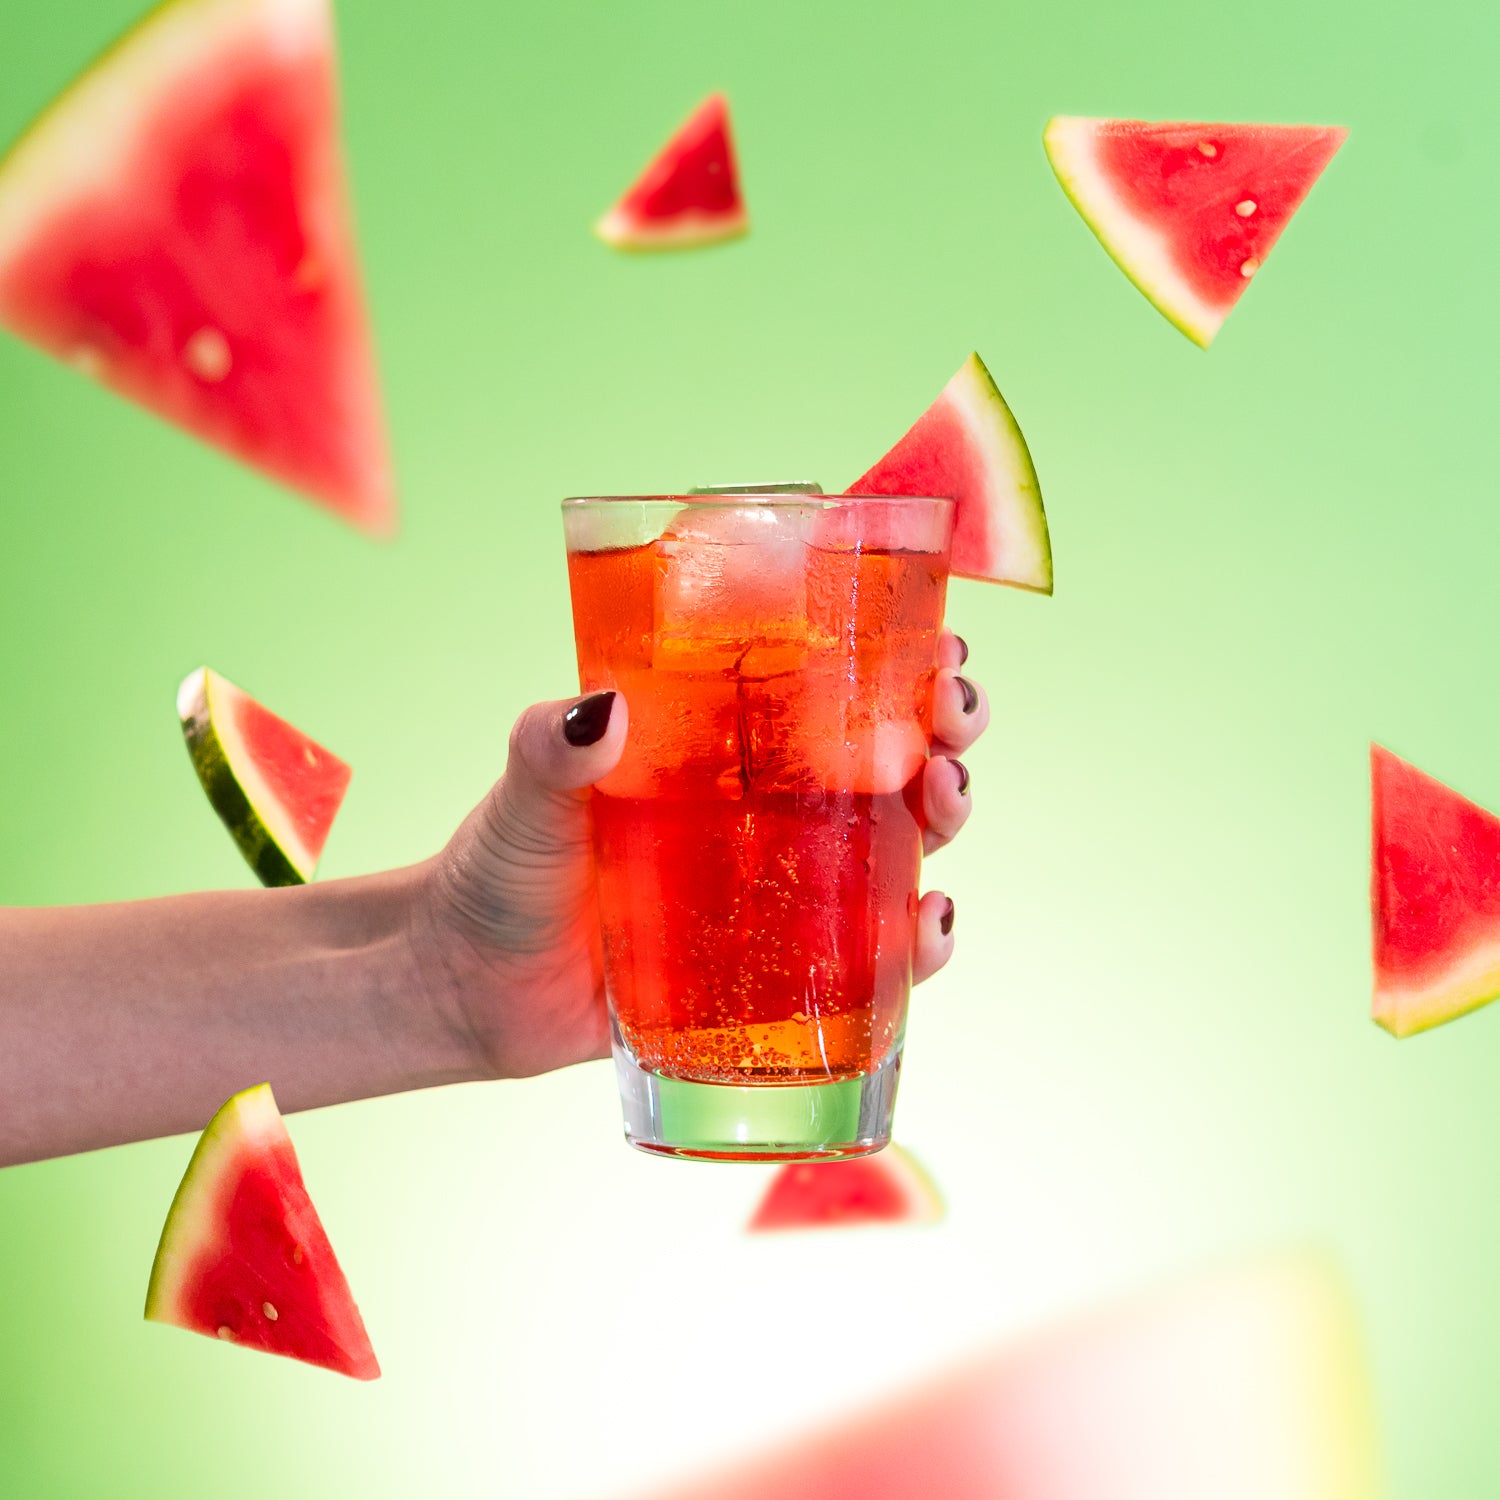 Torani Sugar Free Flavored Syrups - 750 ml Glass Bottle: Watermelon